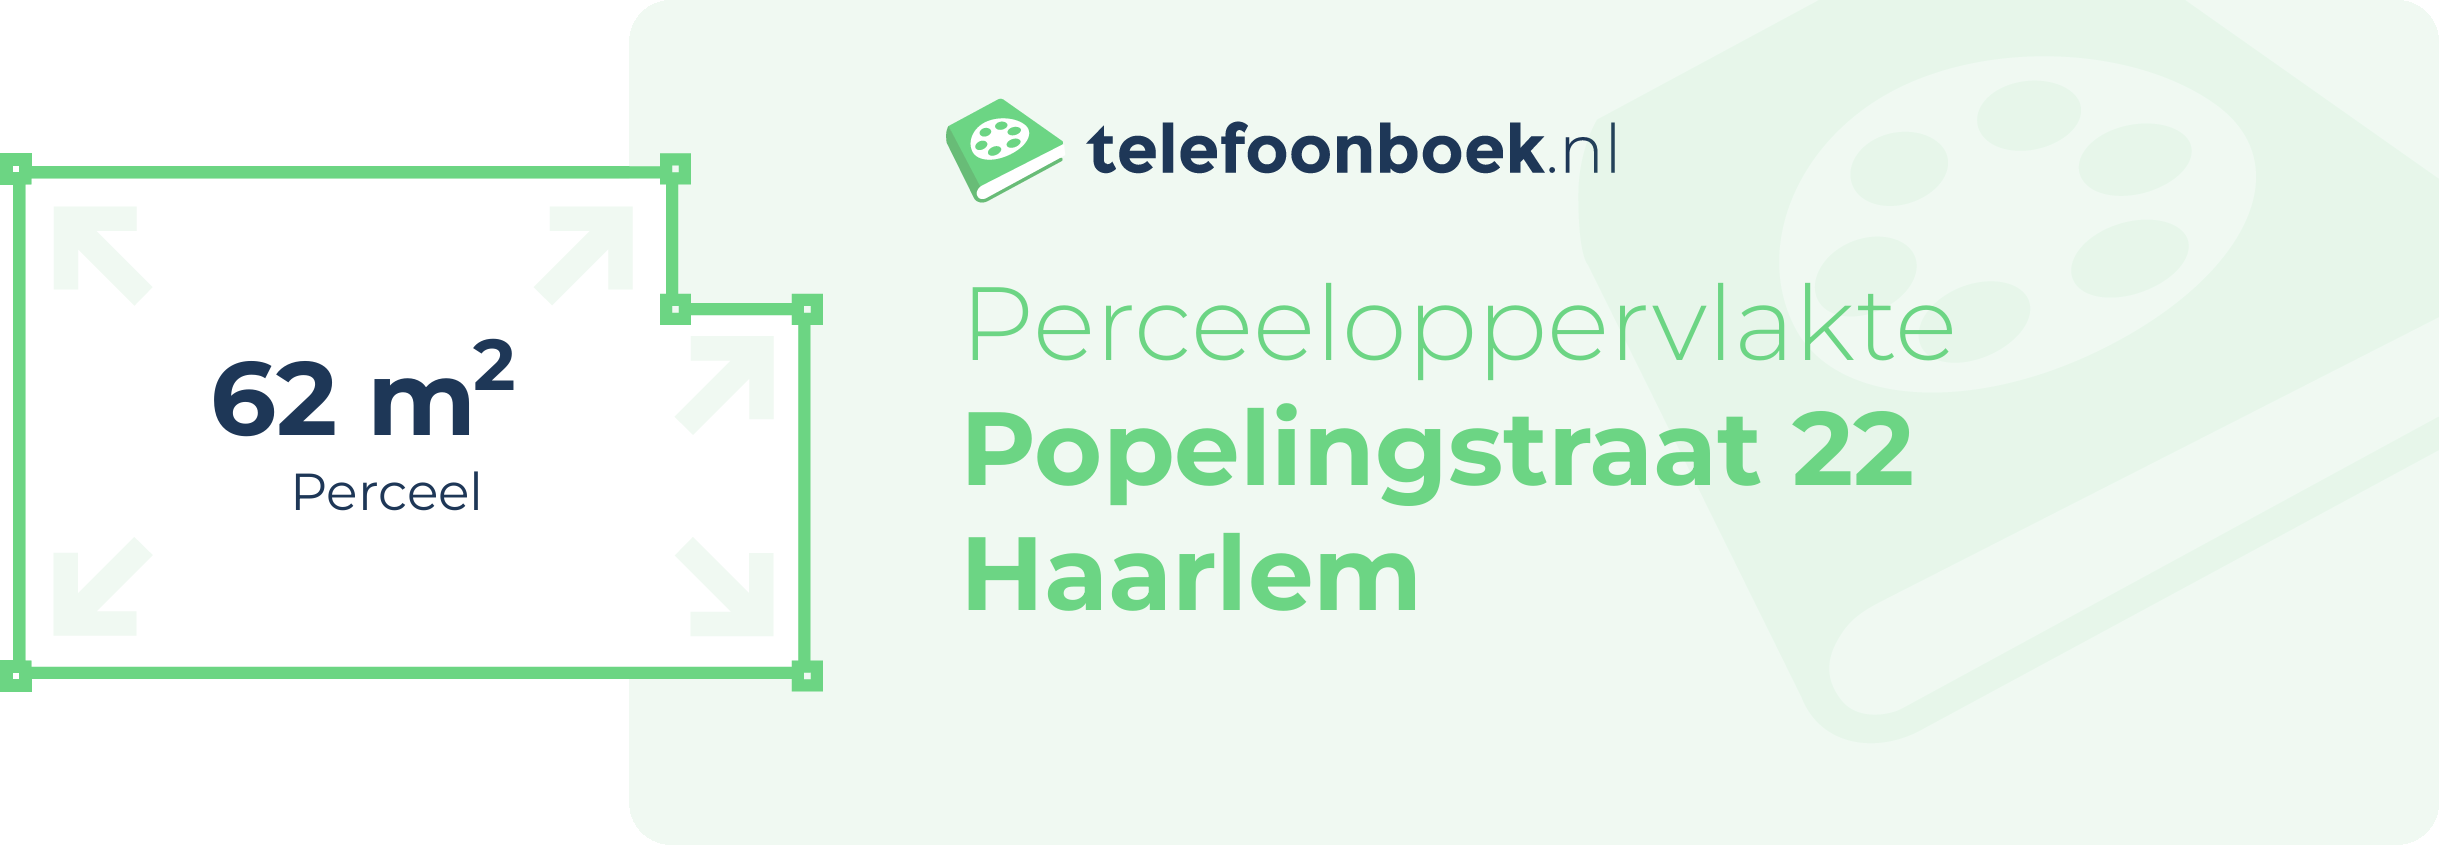 Perceeloppervlakte Popelingstraat 22 Haarlem